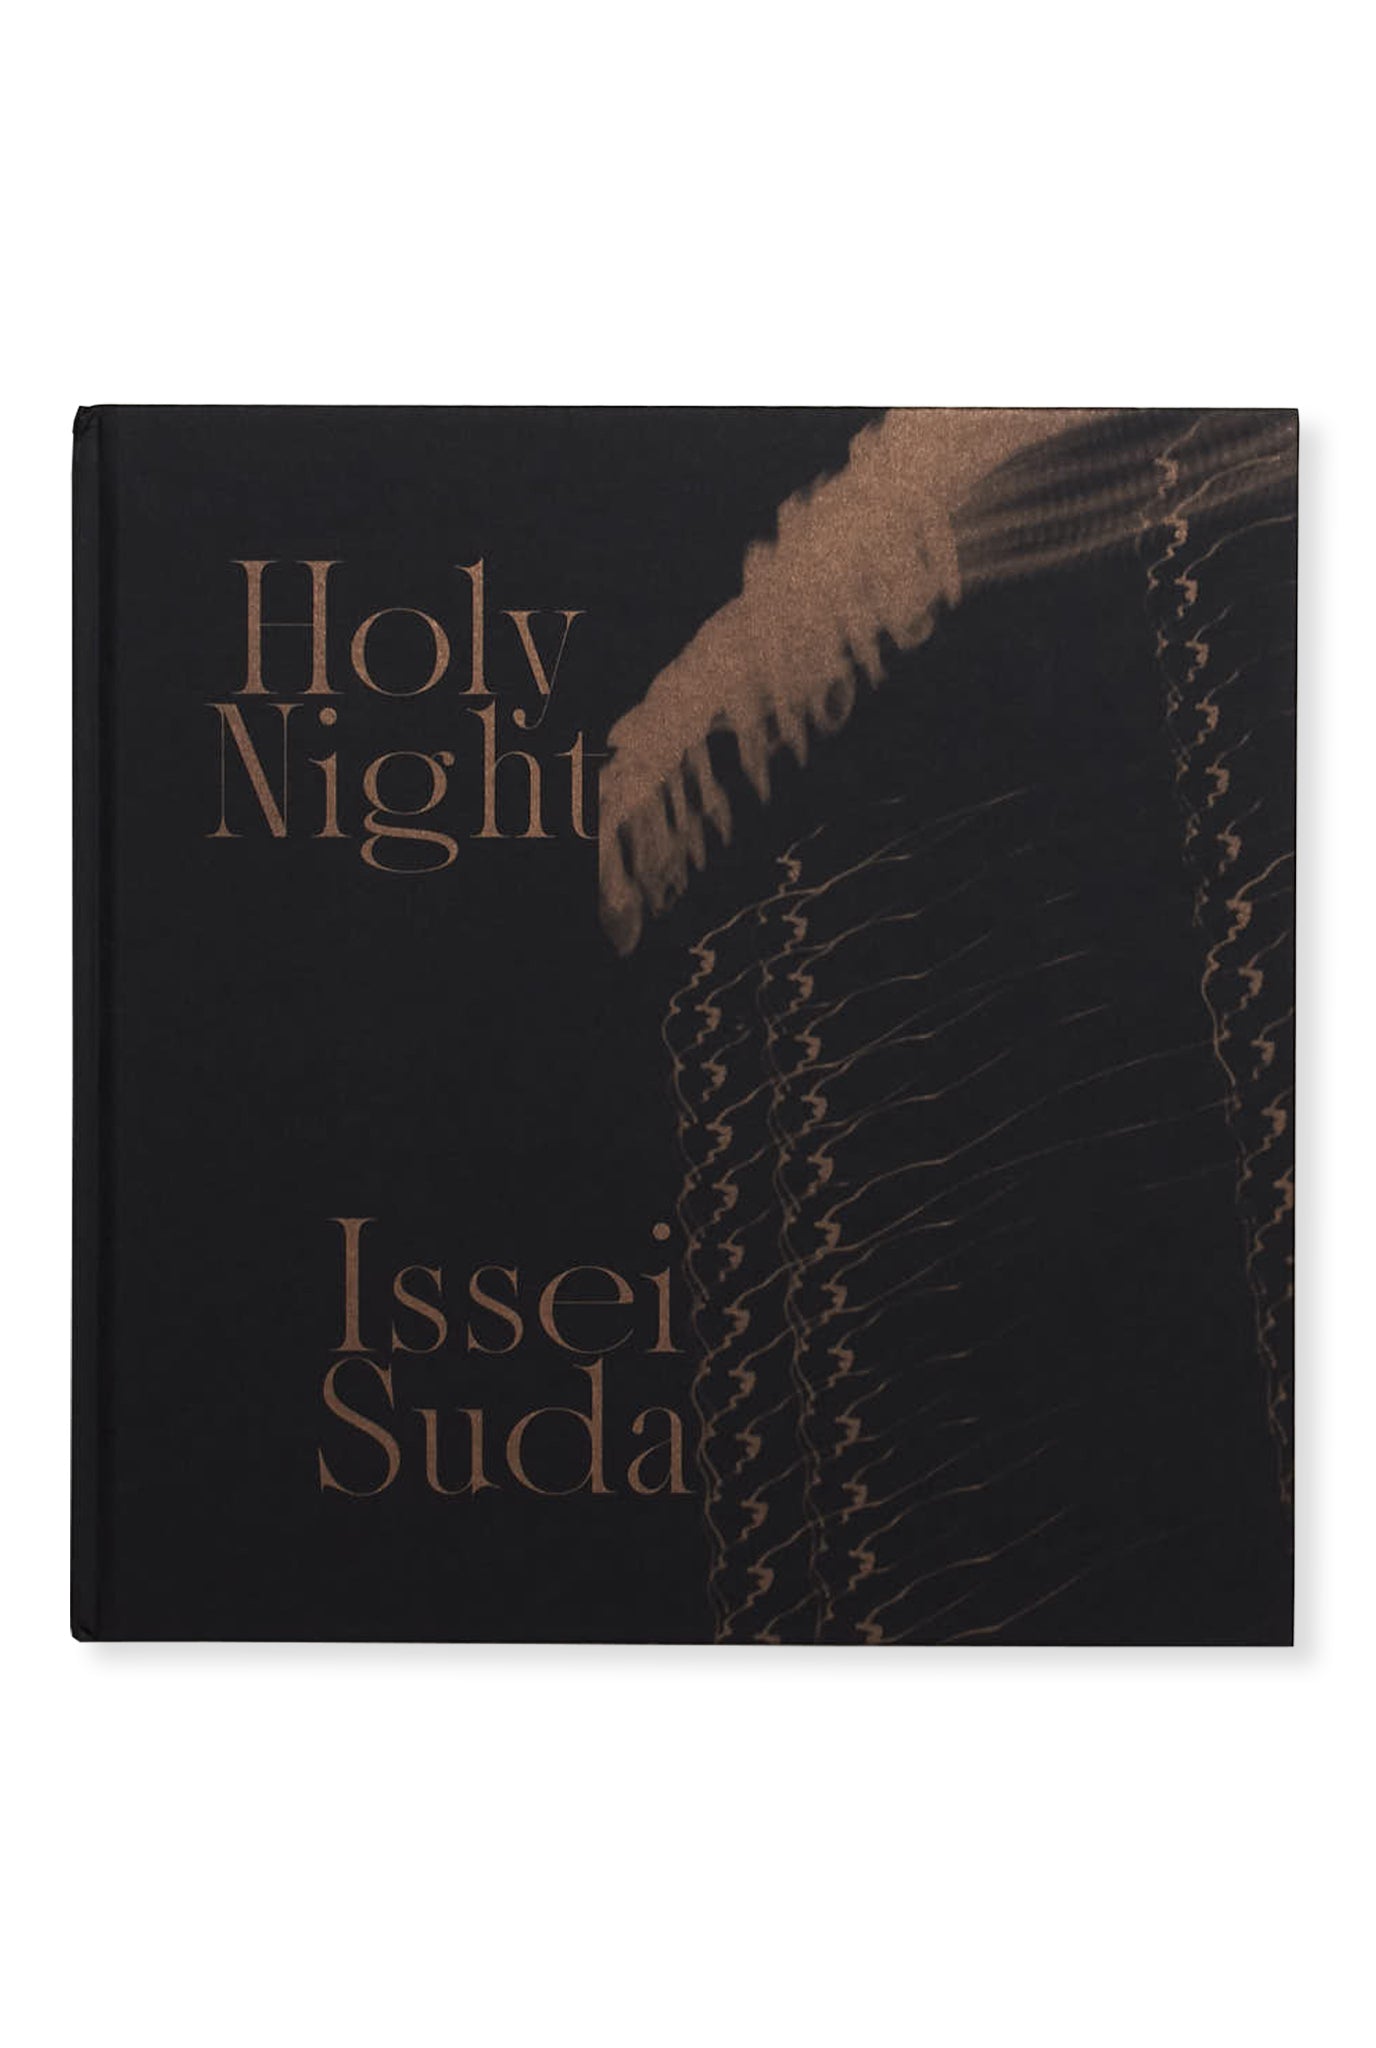 Holy Night by Issei Suda